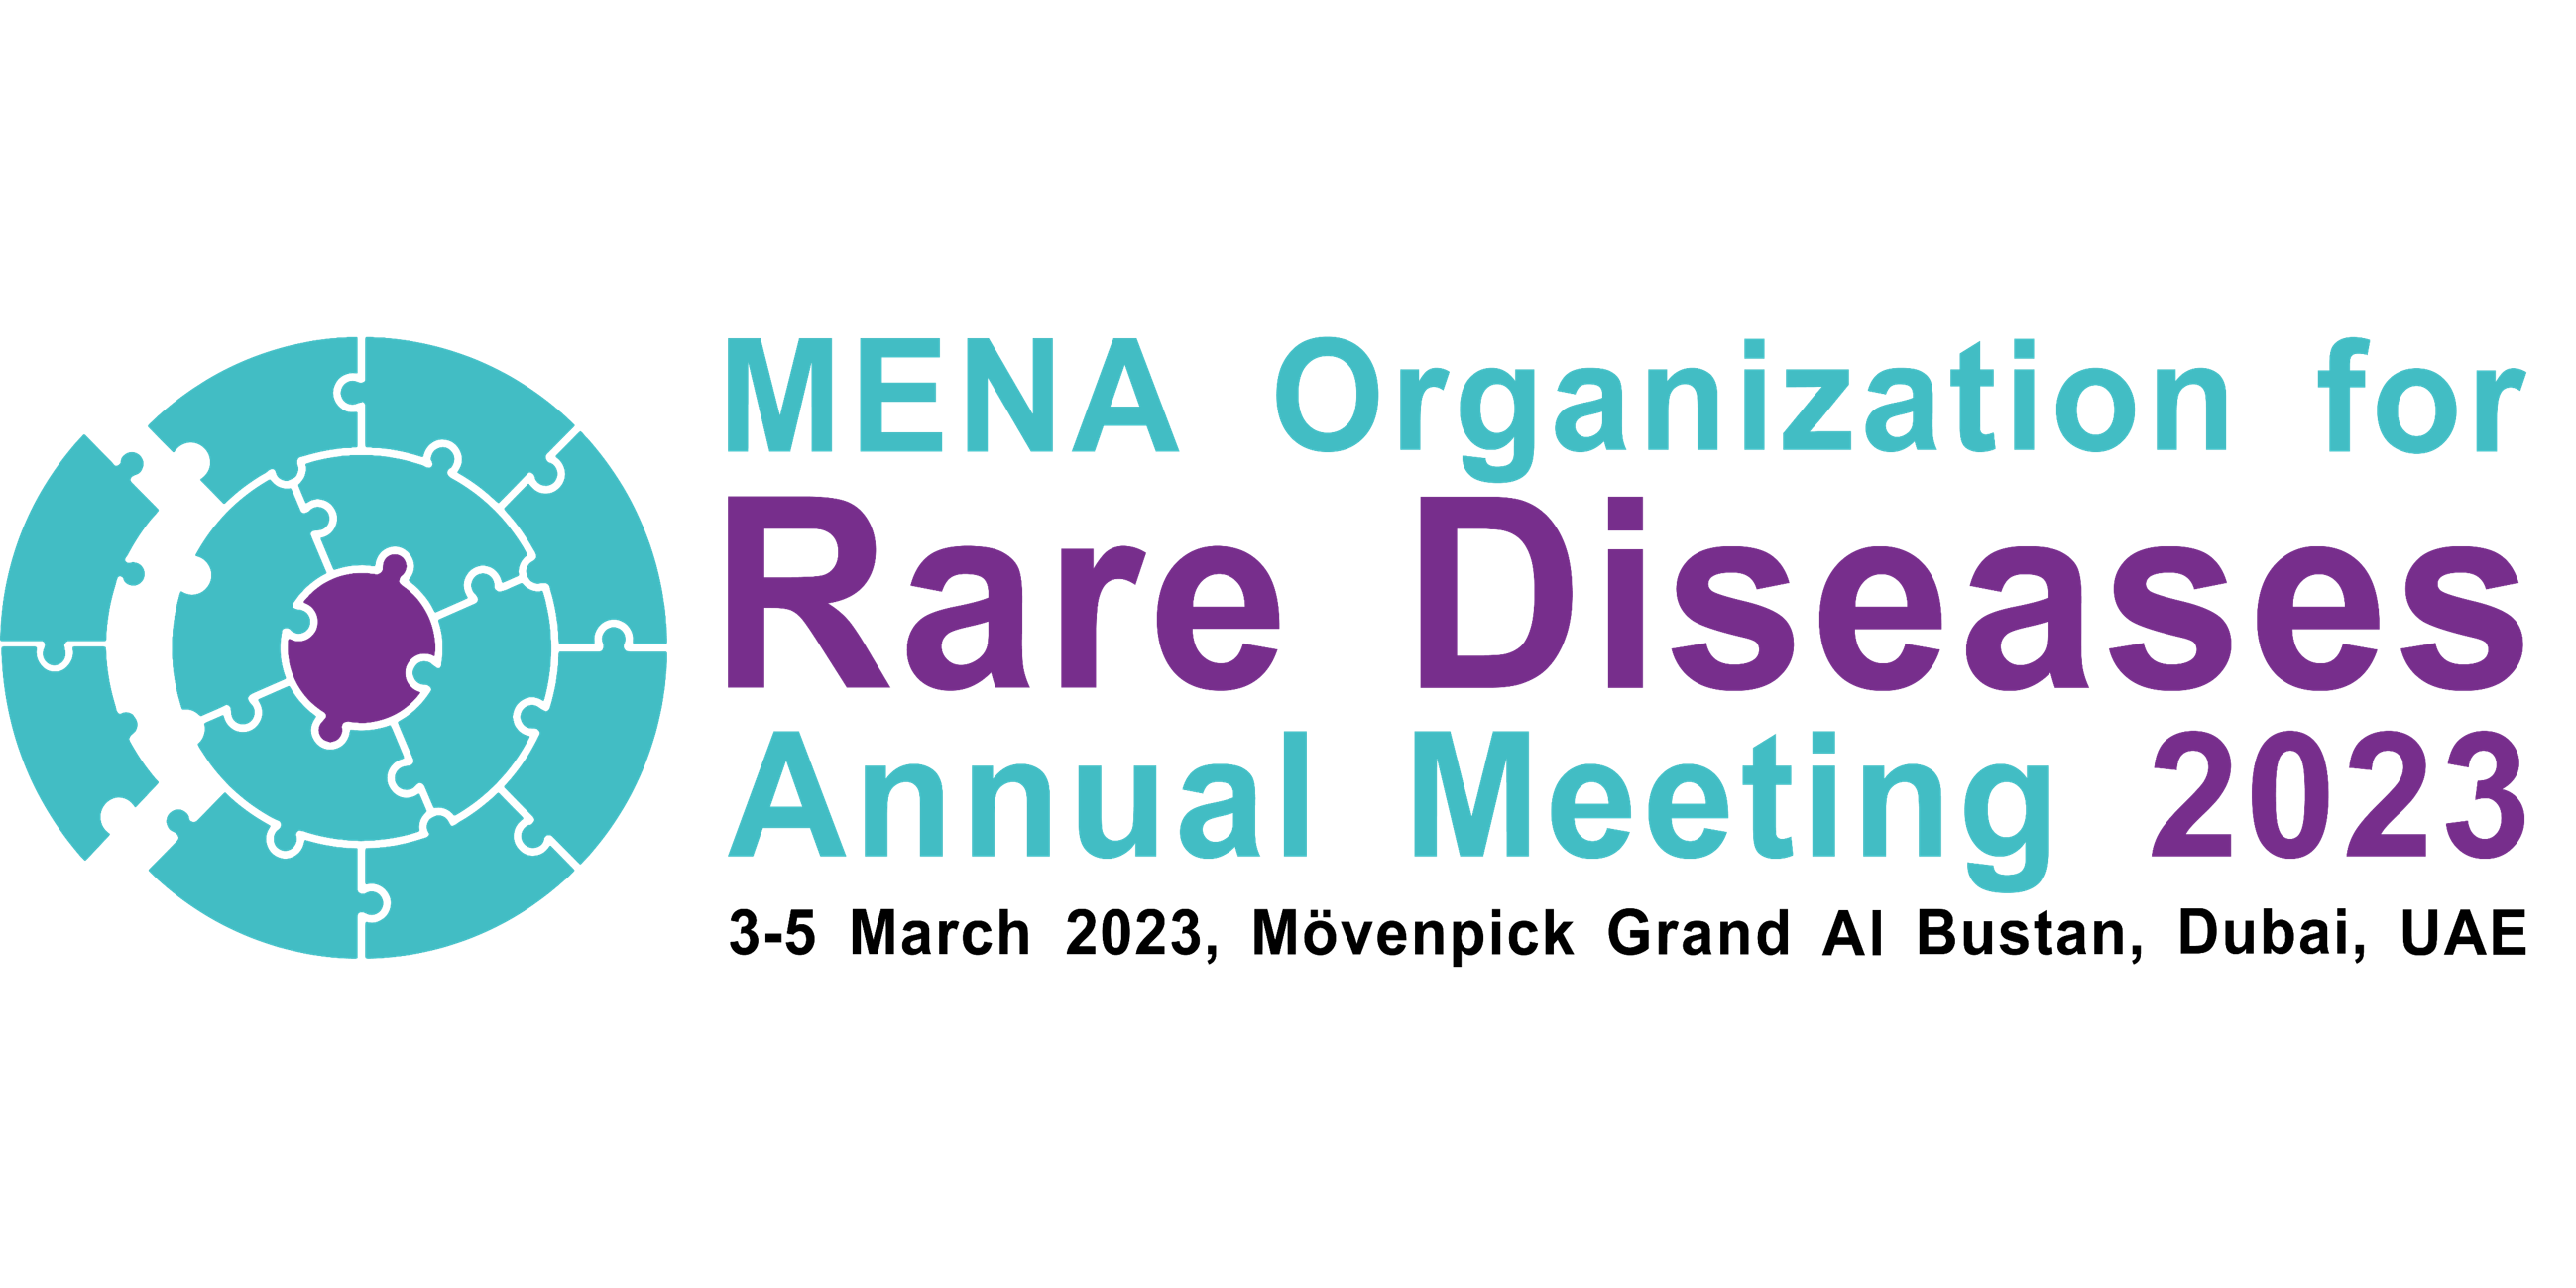 MENA Organization for Rare Diseases (MORD) Annual Meeting 2023